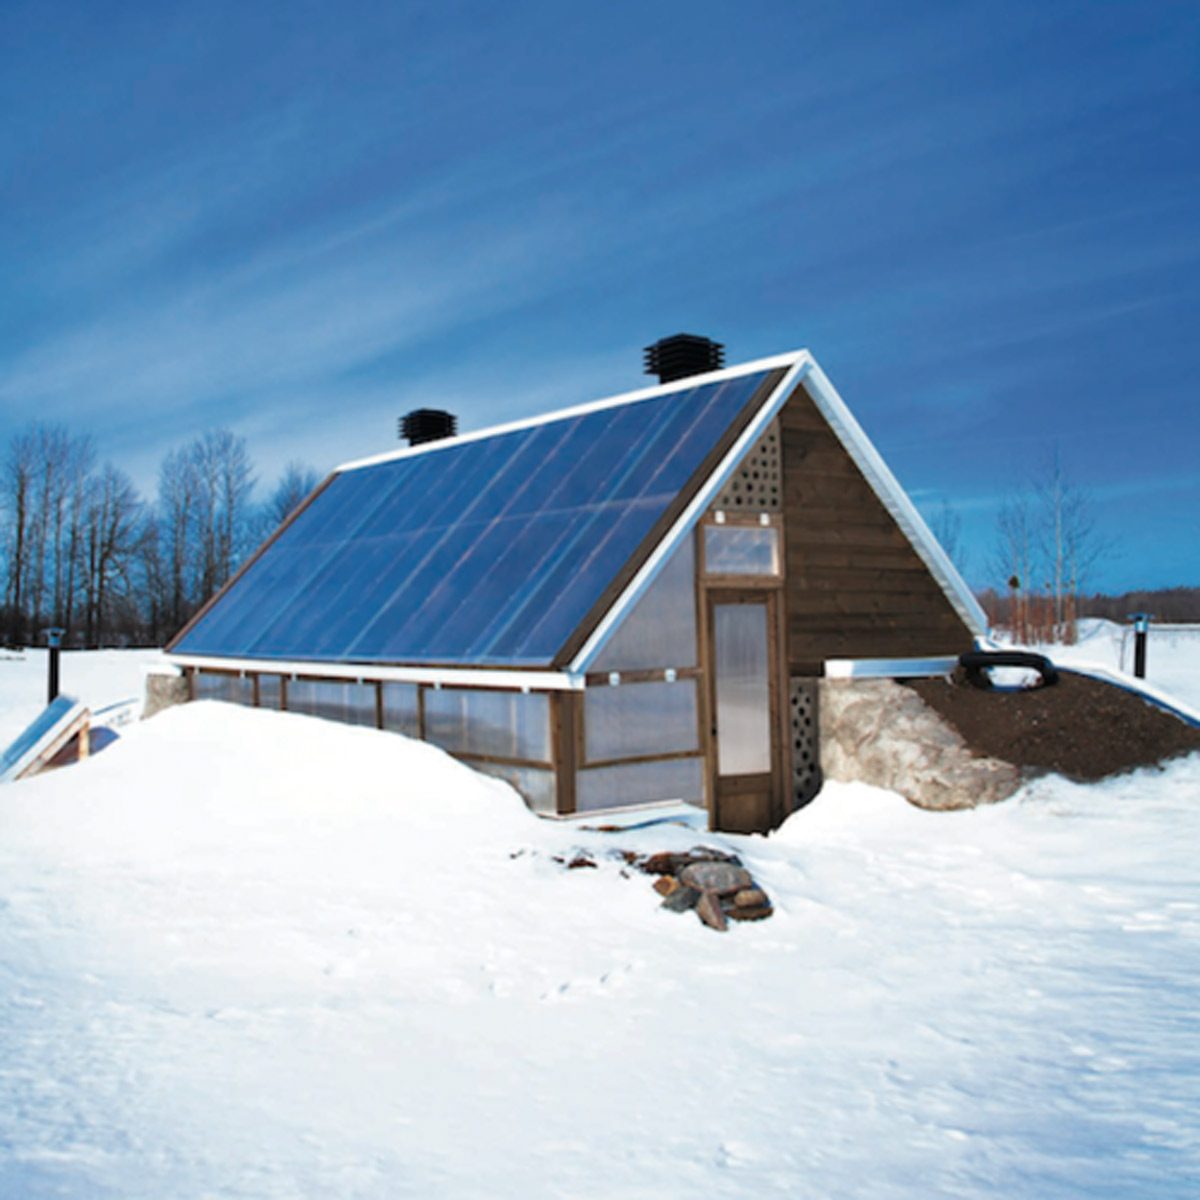 solar greenhouse winter backyard greenhouse diy